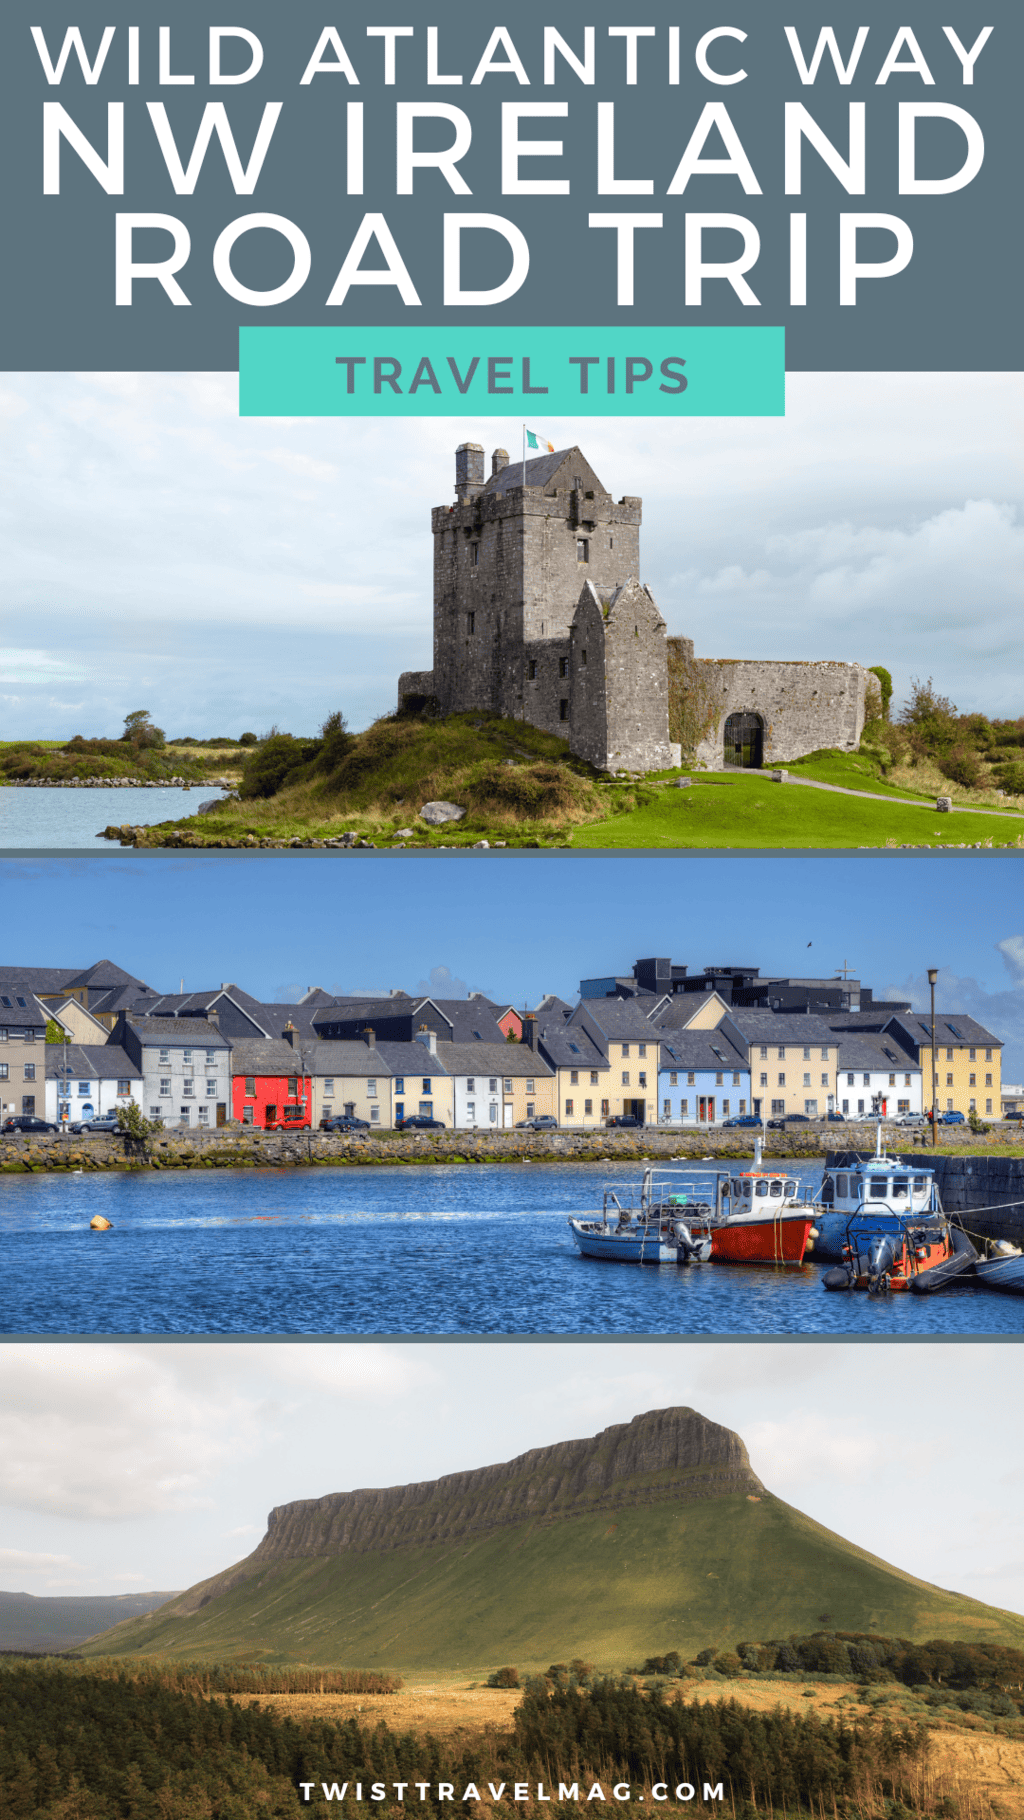 10 Day Ireland Road Trip Itinerary on the Wild Atlantic Way Northwest Coast - credit Keryn Means of Twist Travel Magazine